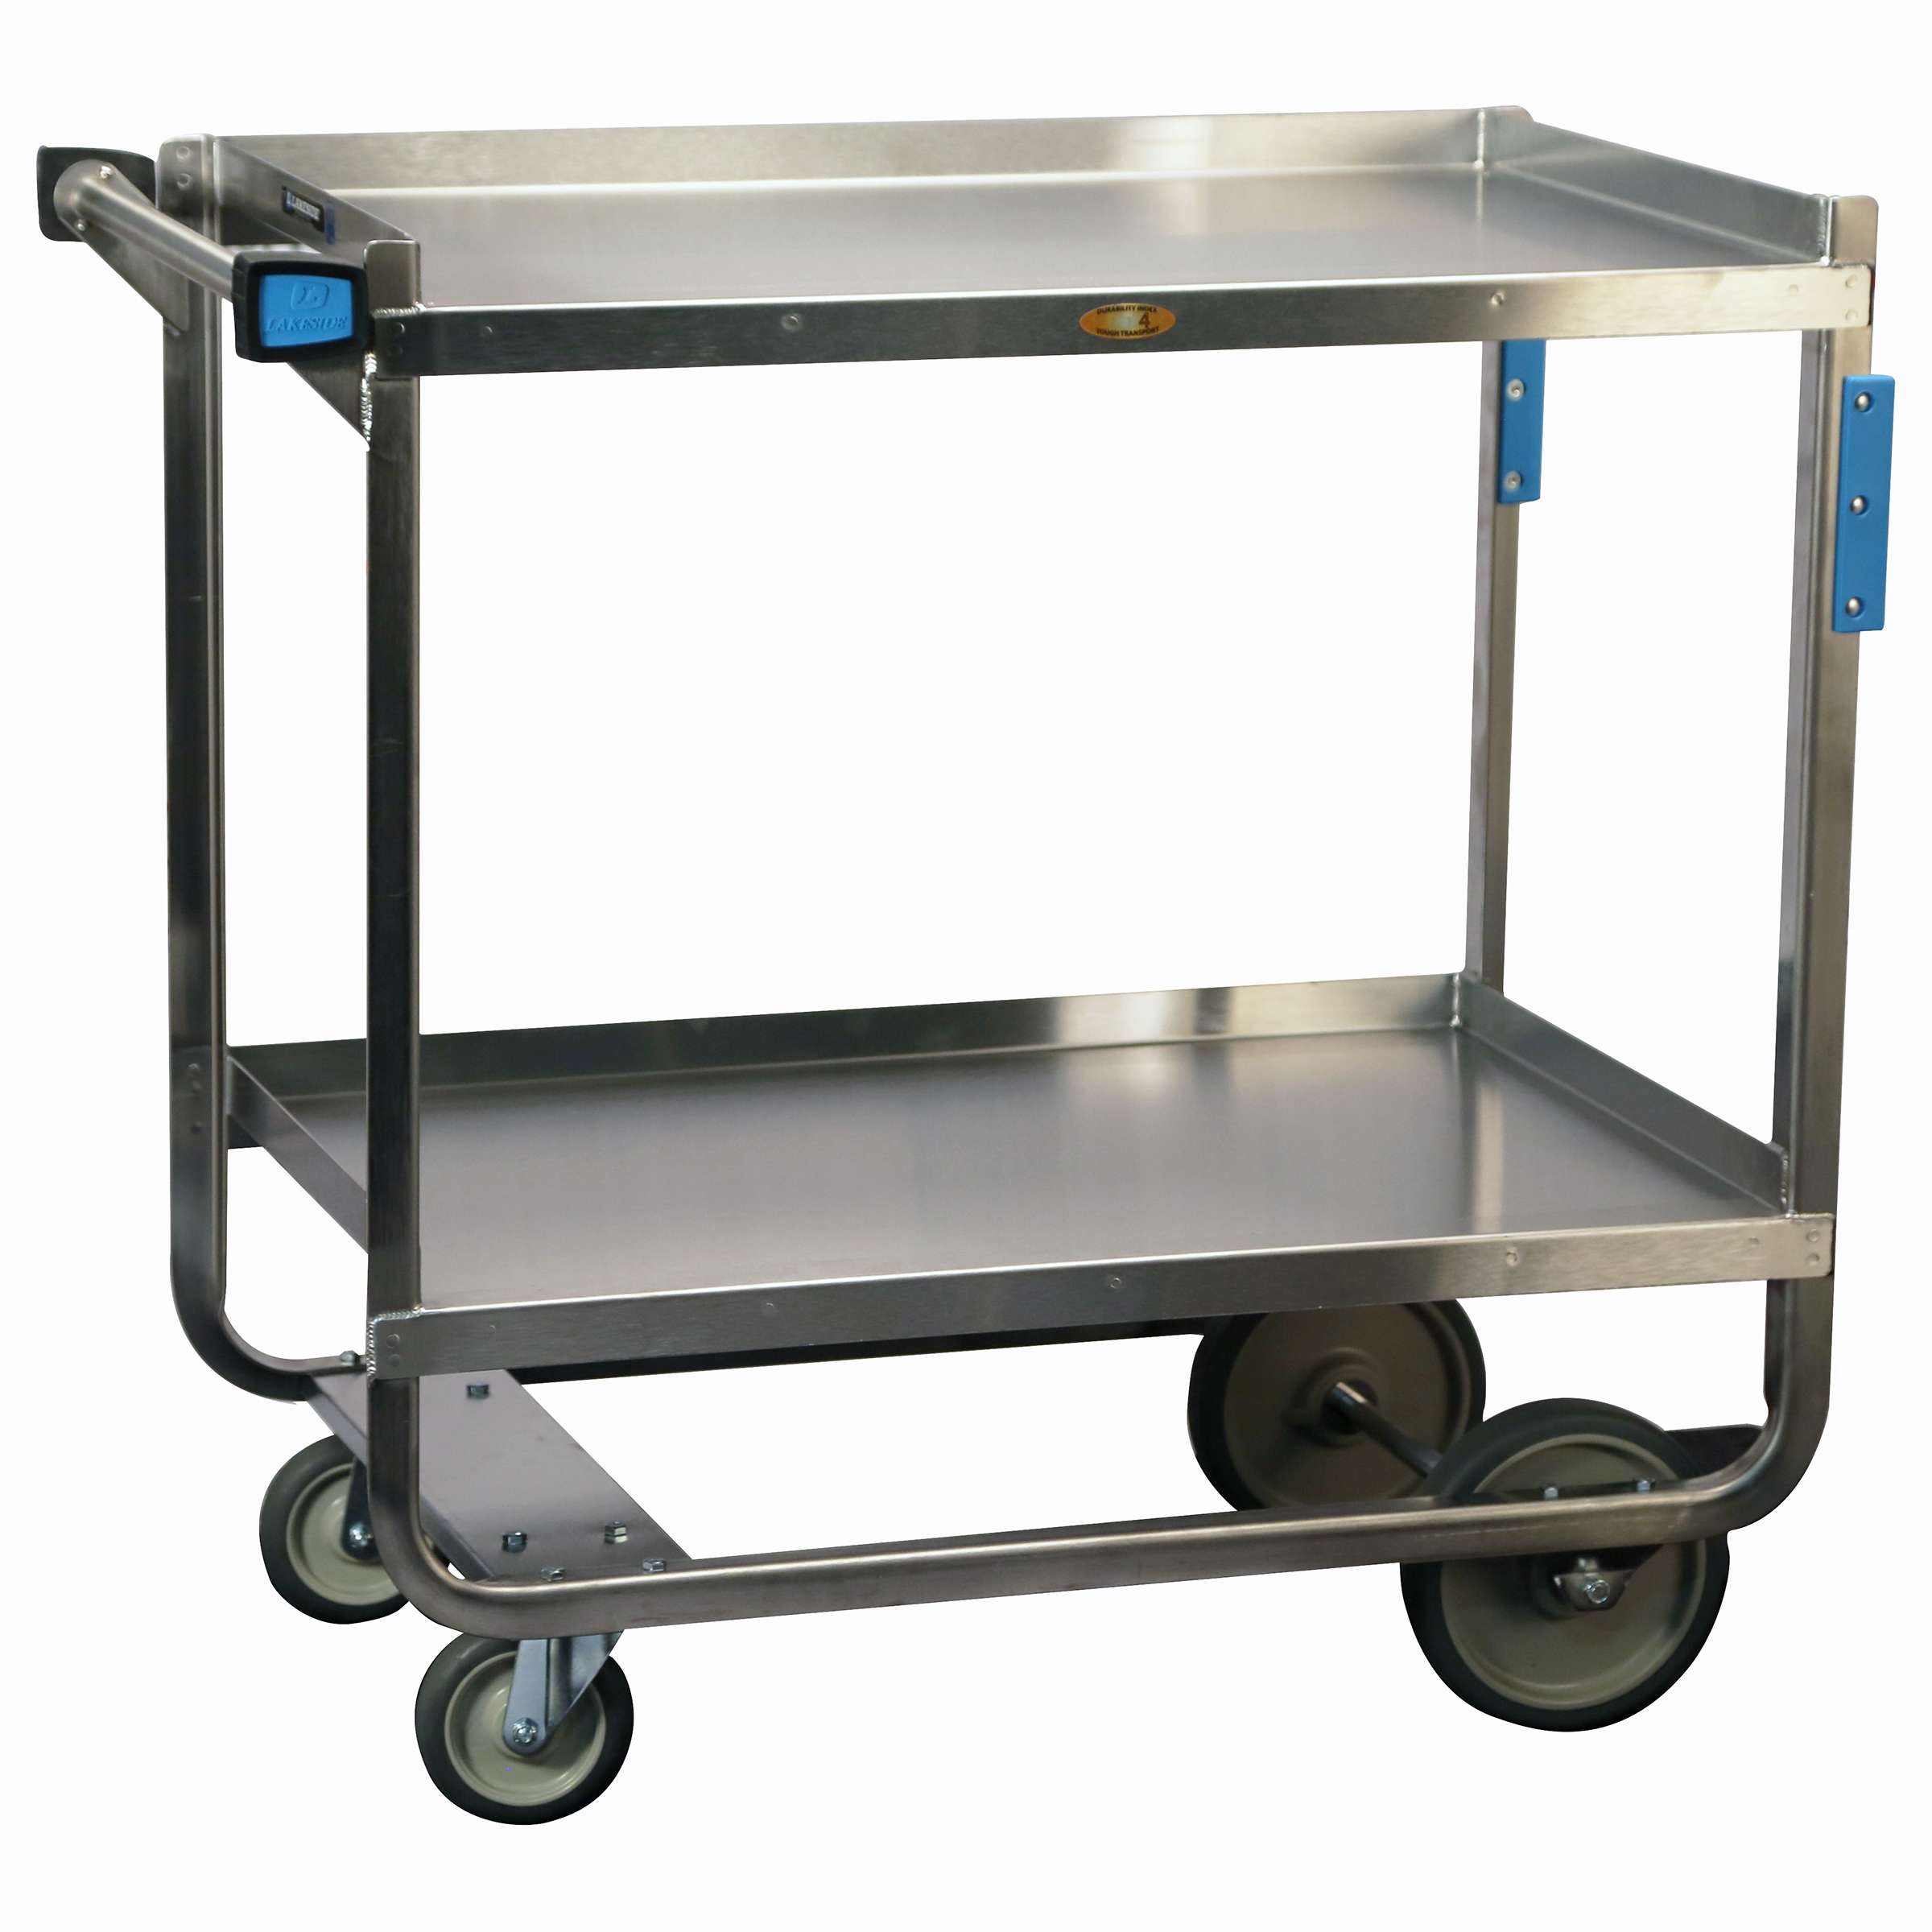 Alimed Stainless Steel Heavy Duty Utility Cart | 2970014437 936411